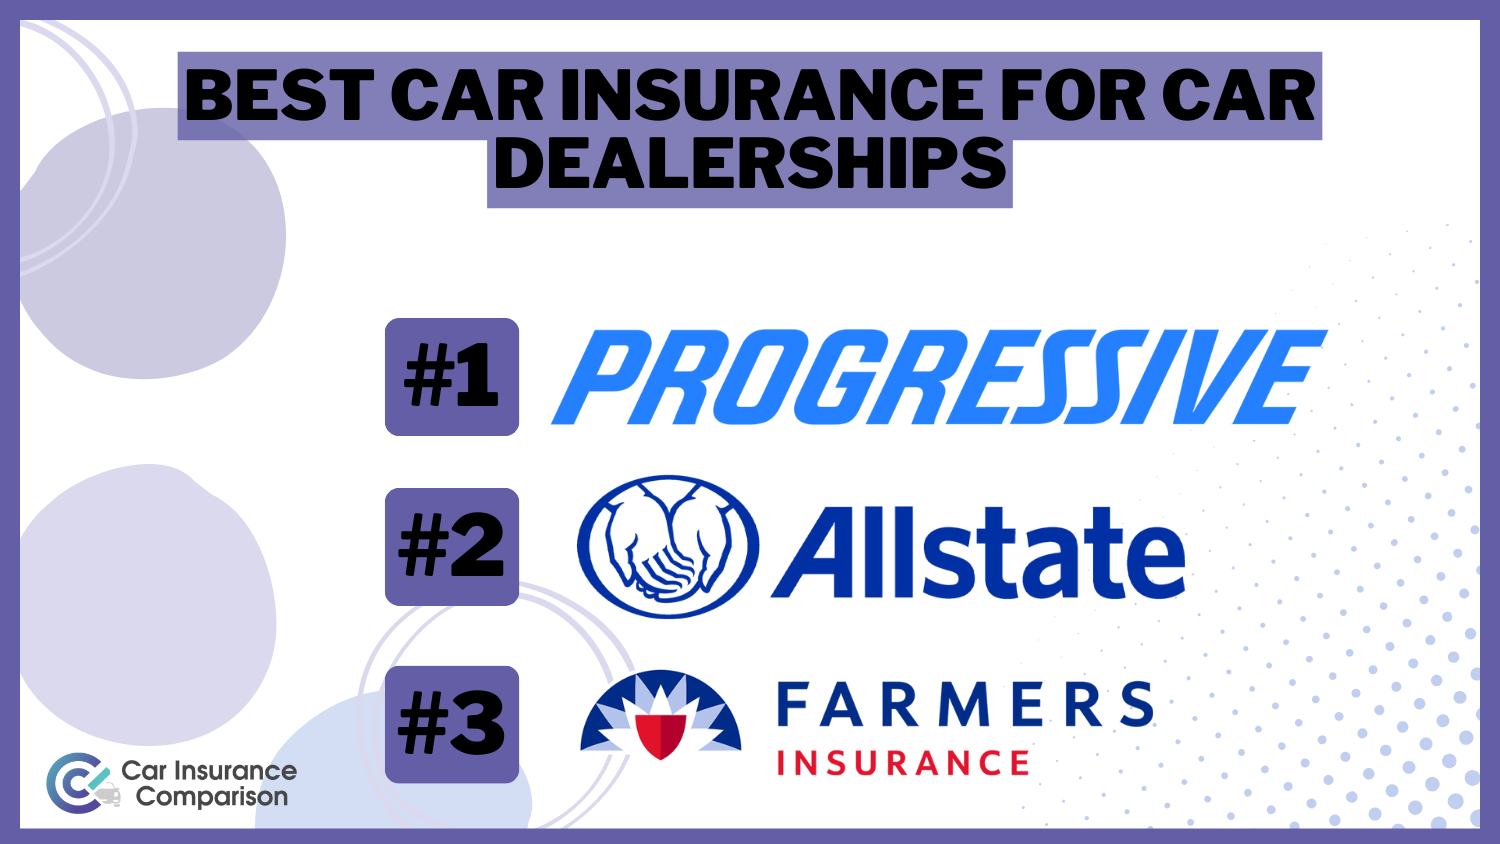 Best Car Insurance for Car Dealerships: Progressive, Allstate, and Farmers.